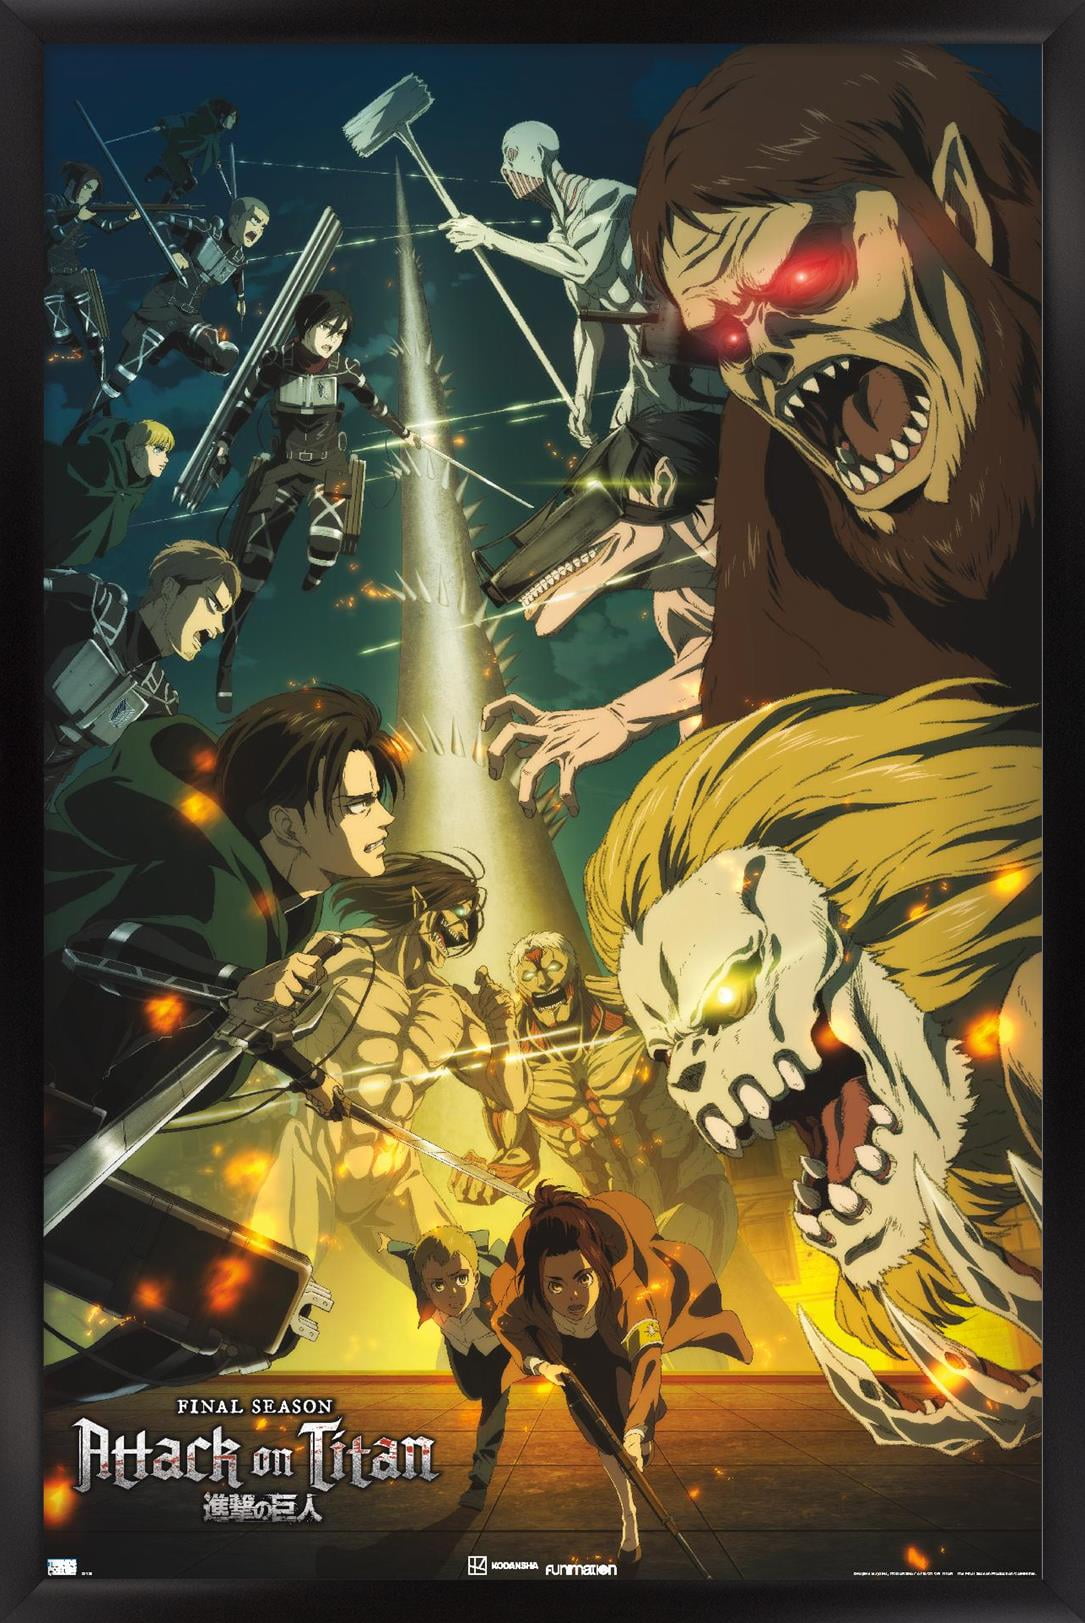 Attack on Titan Season 4 Fan made poster by Drekaava on DeviantArt